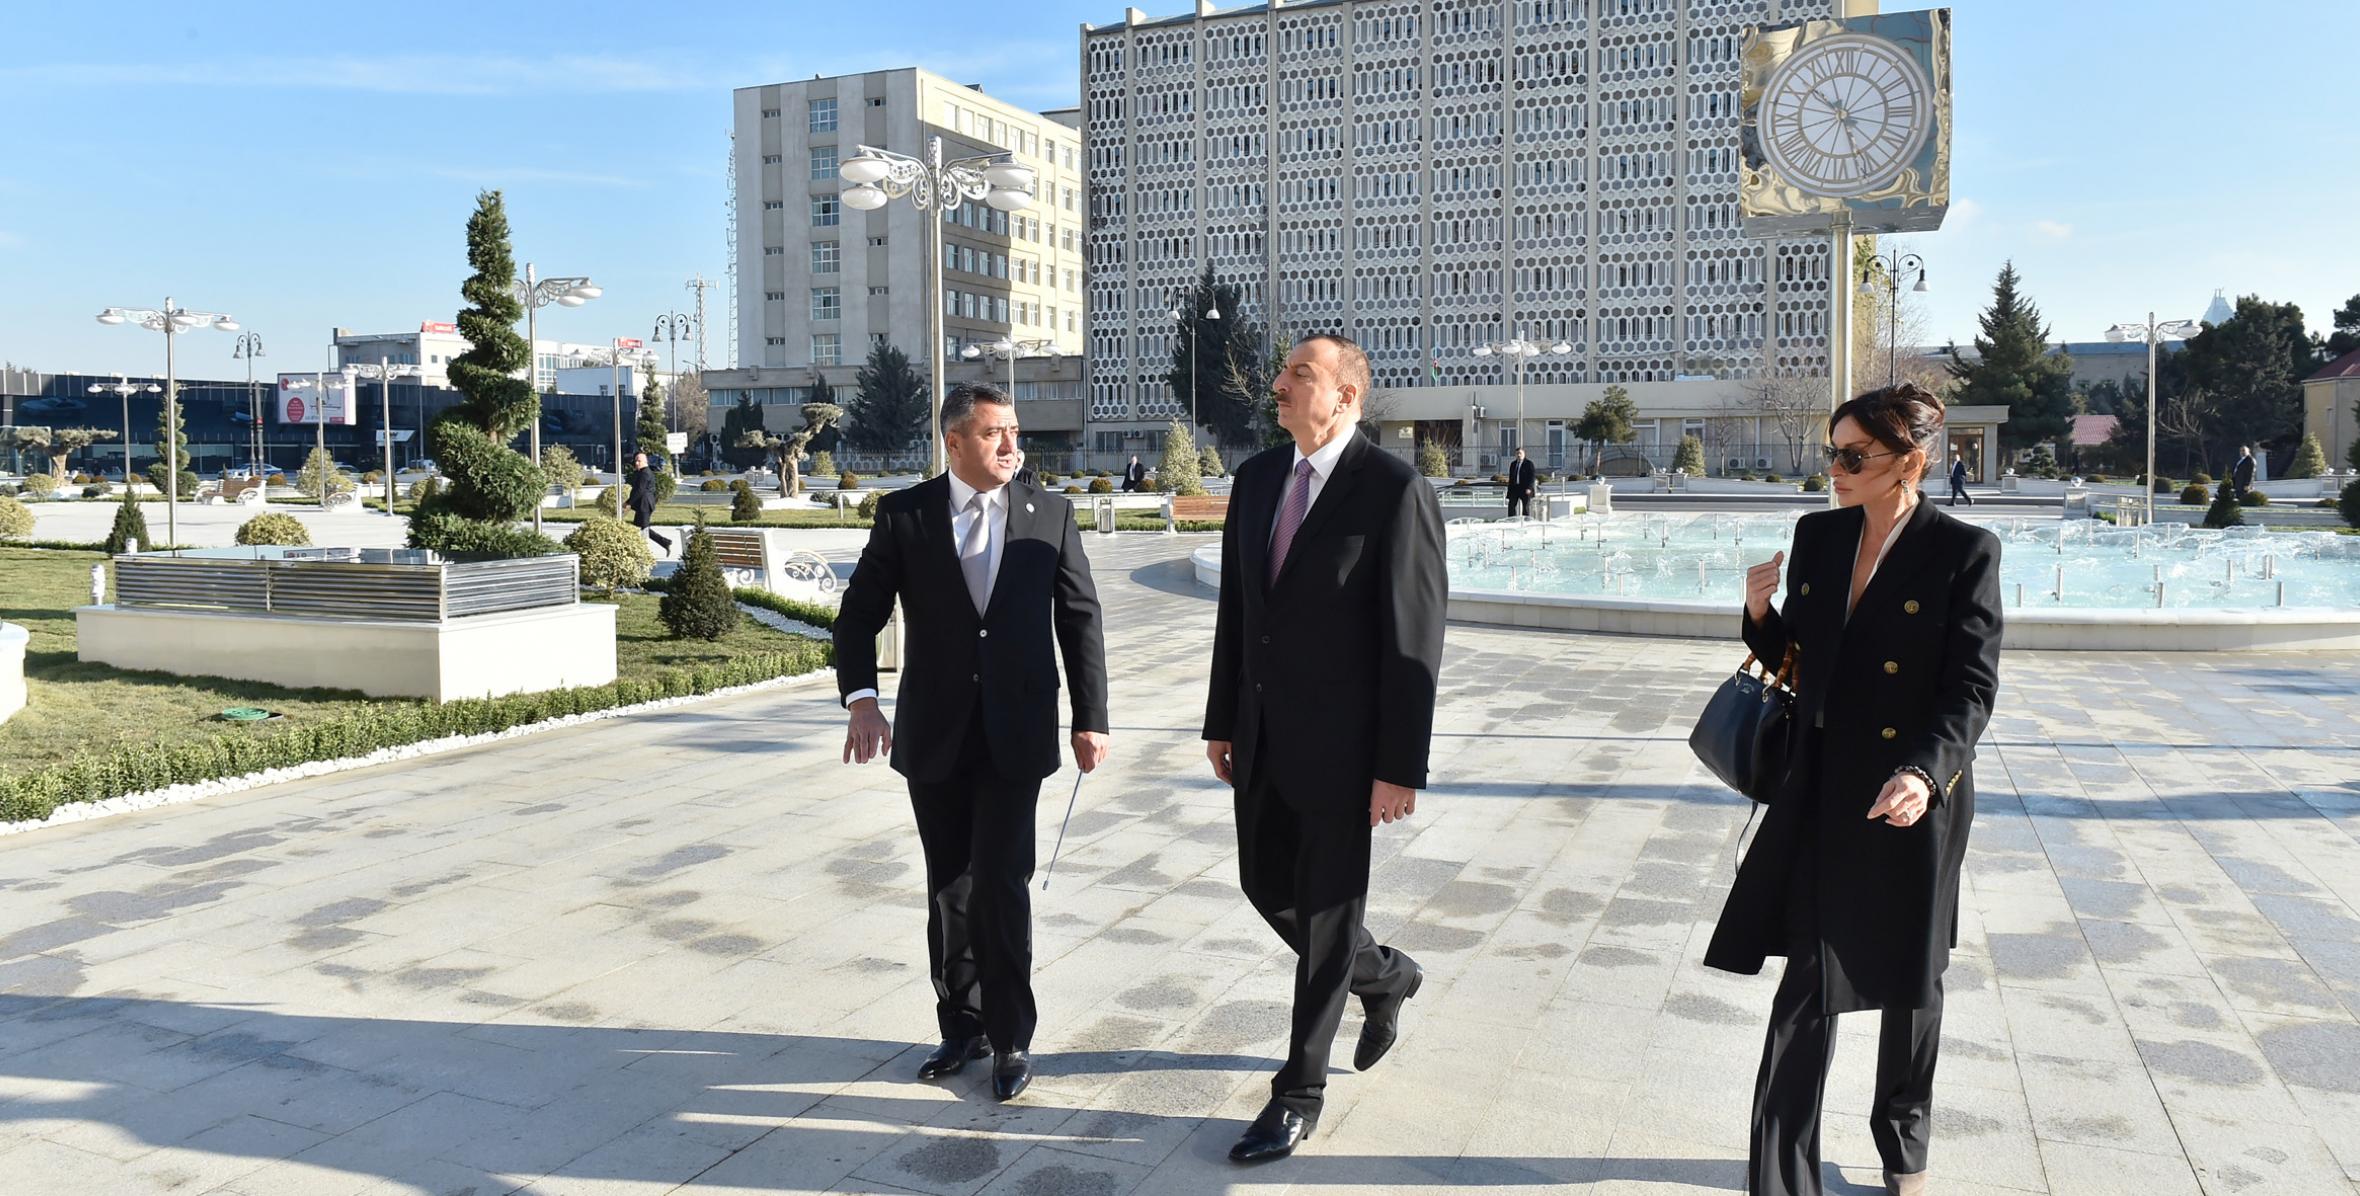 Ilham Aliyev reviewed a new park in Baku